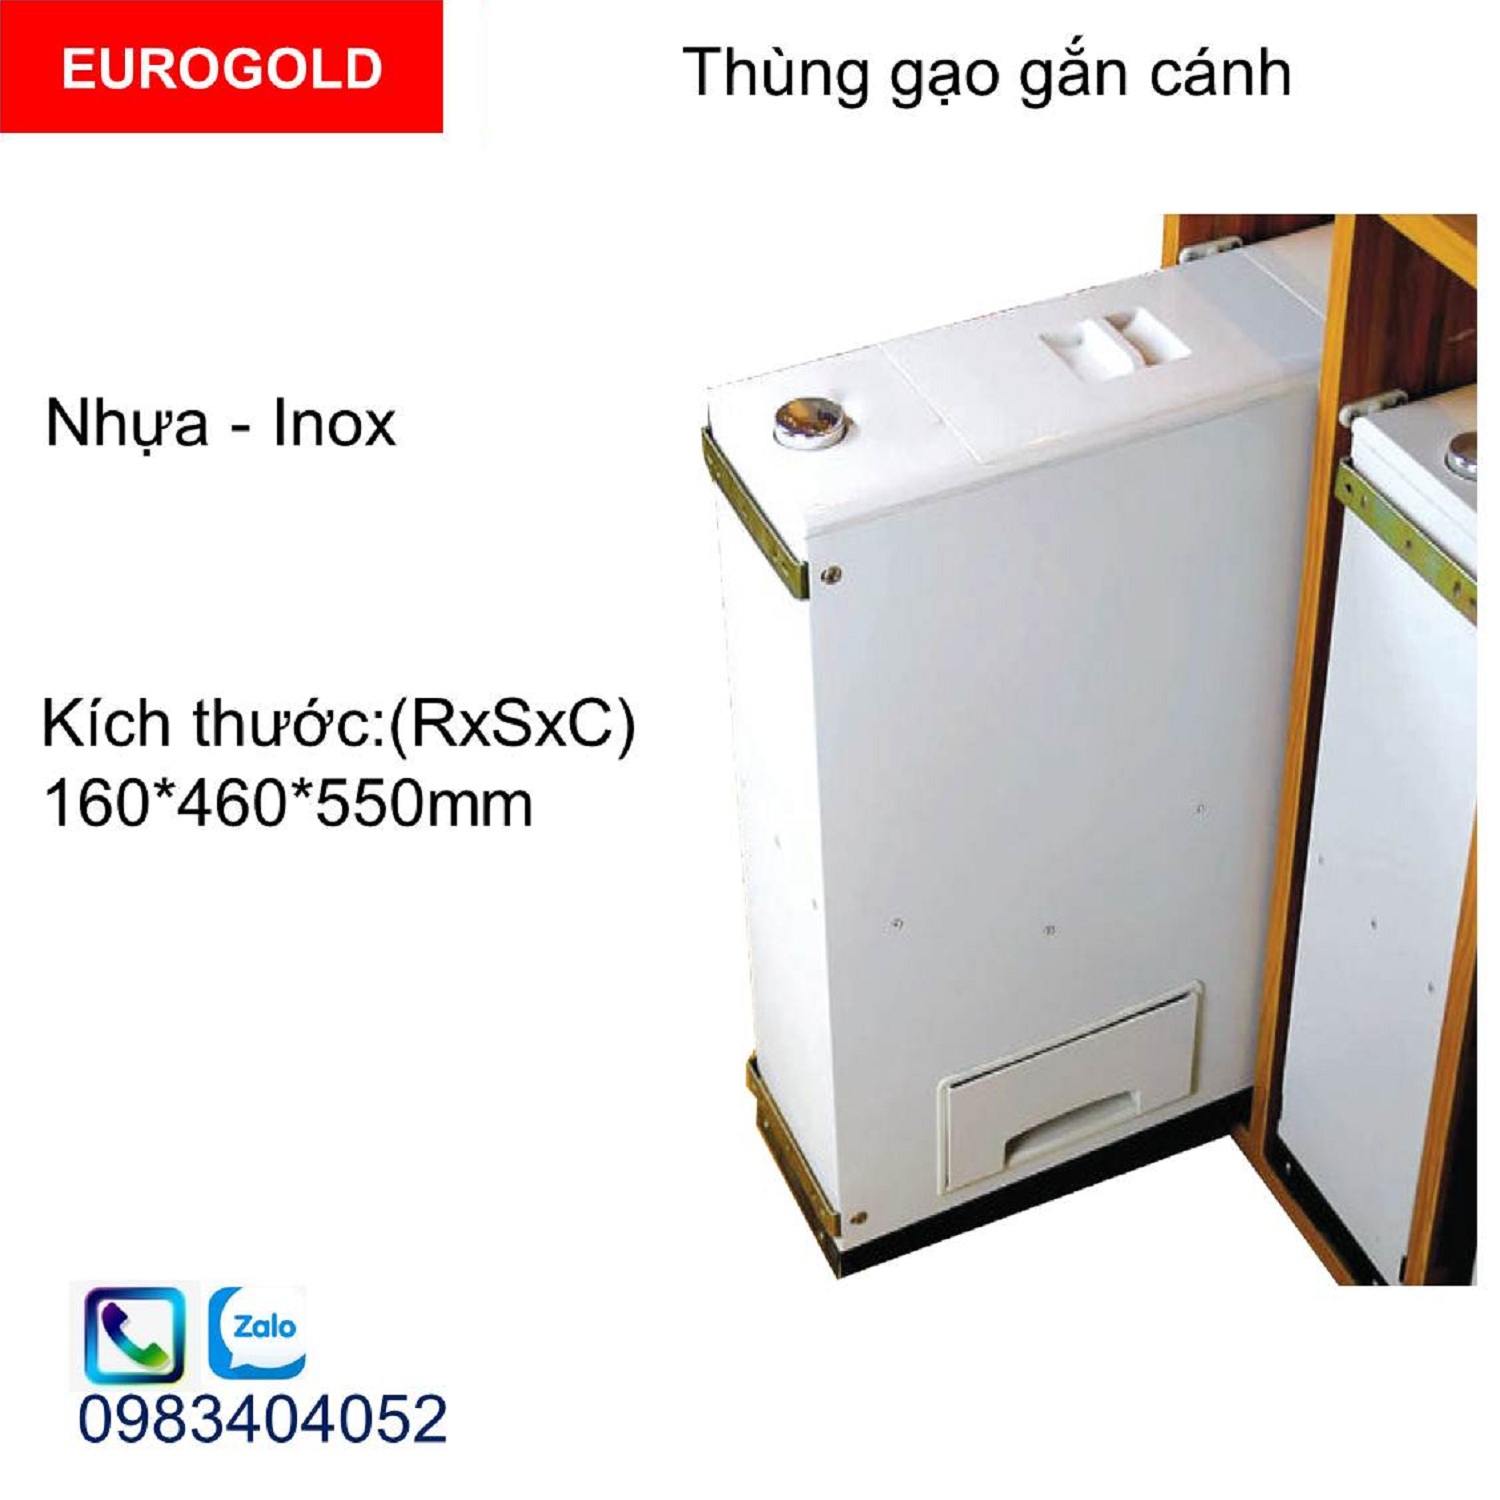 Thung-gao-eurogold